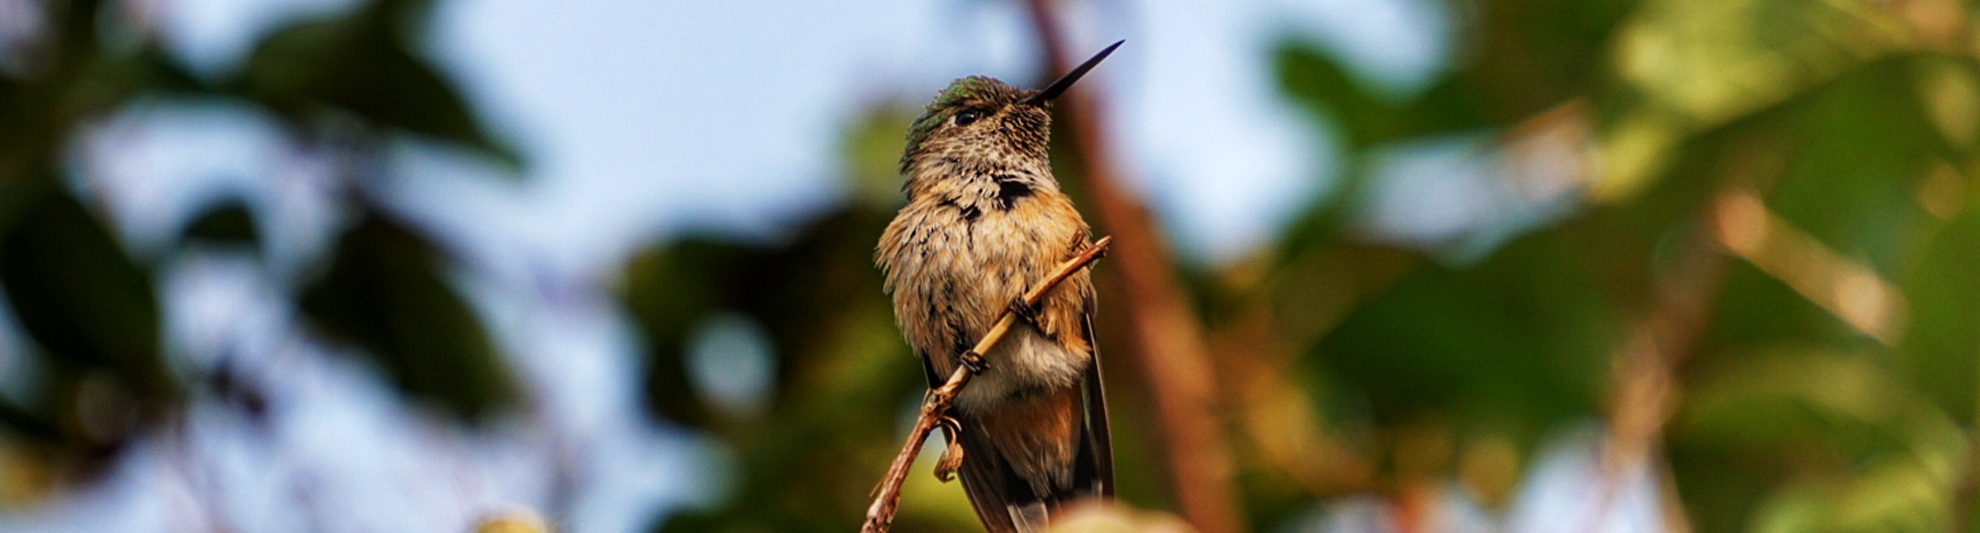 image of bird sitting on branch